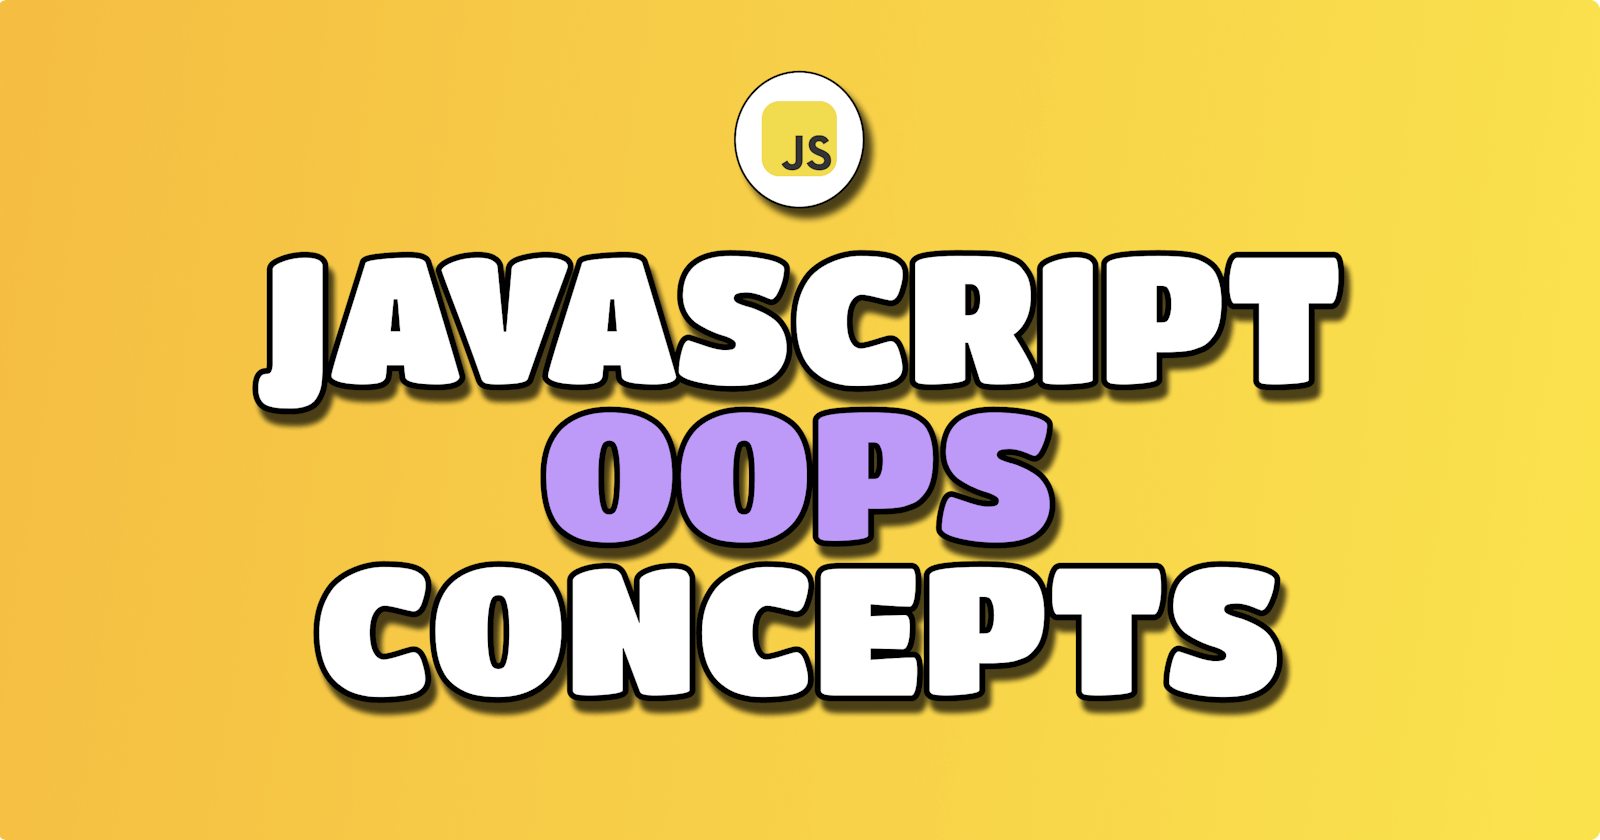 Understanding Object-Oriented Programming in JavaScript